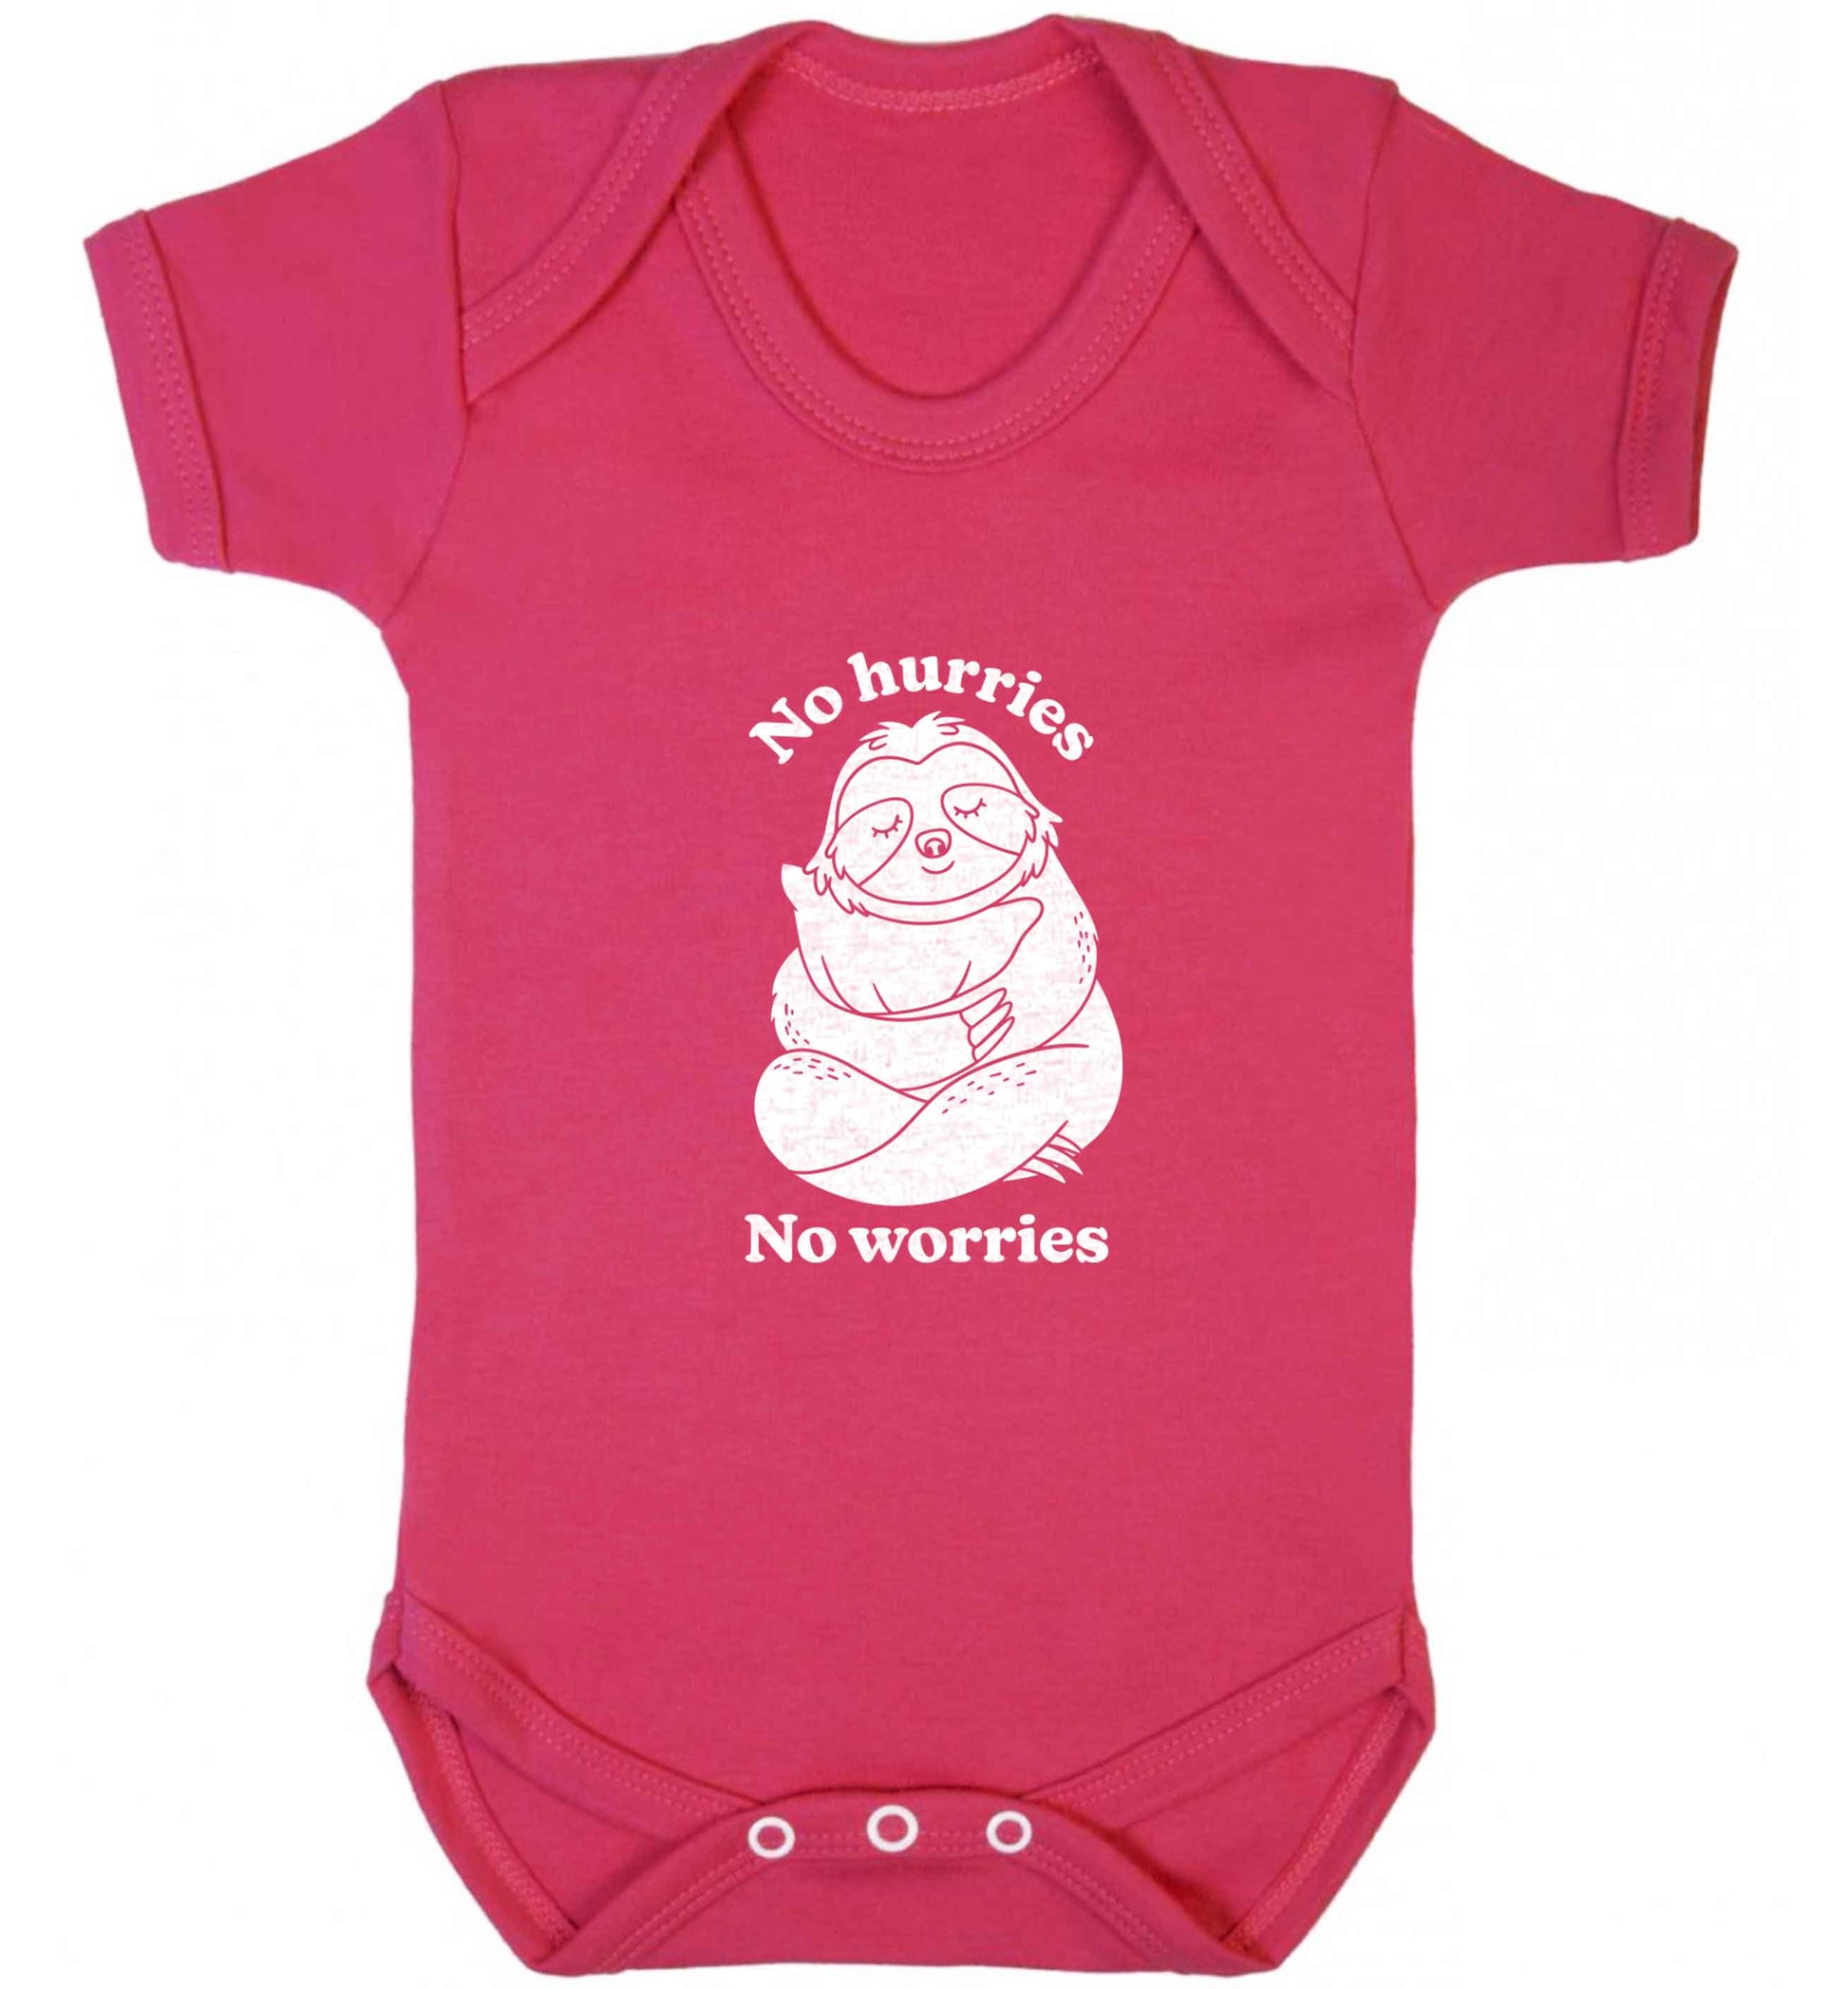 No hurries no worries baby vest dark pink 18-24 months